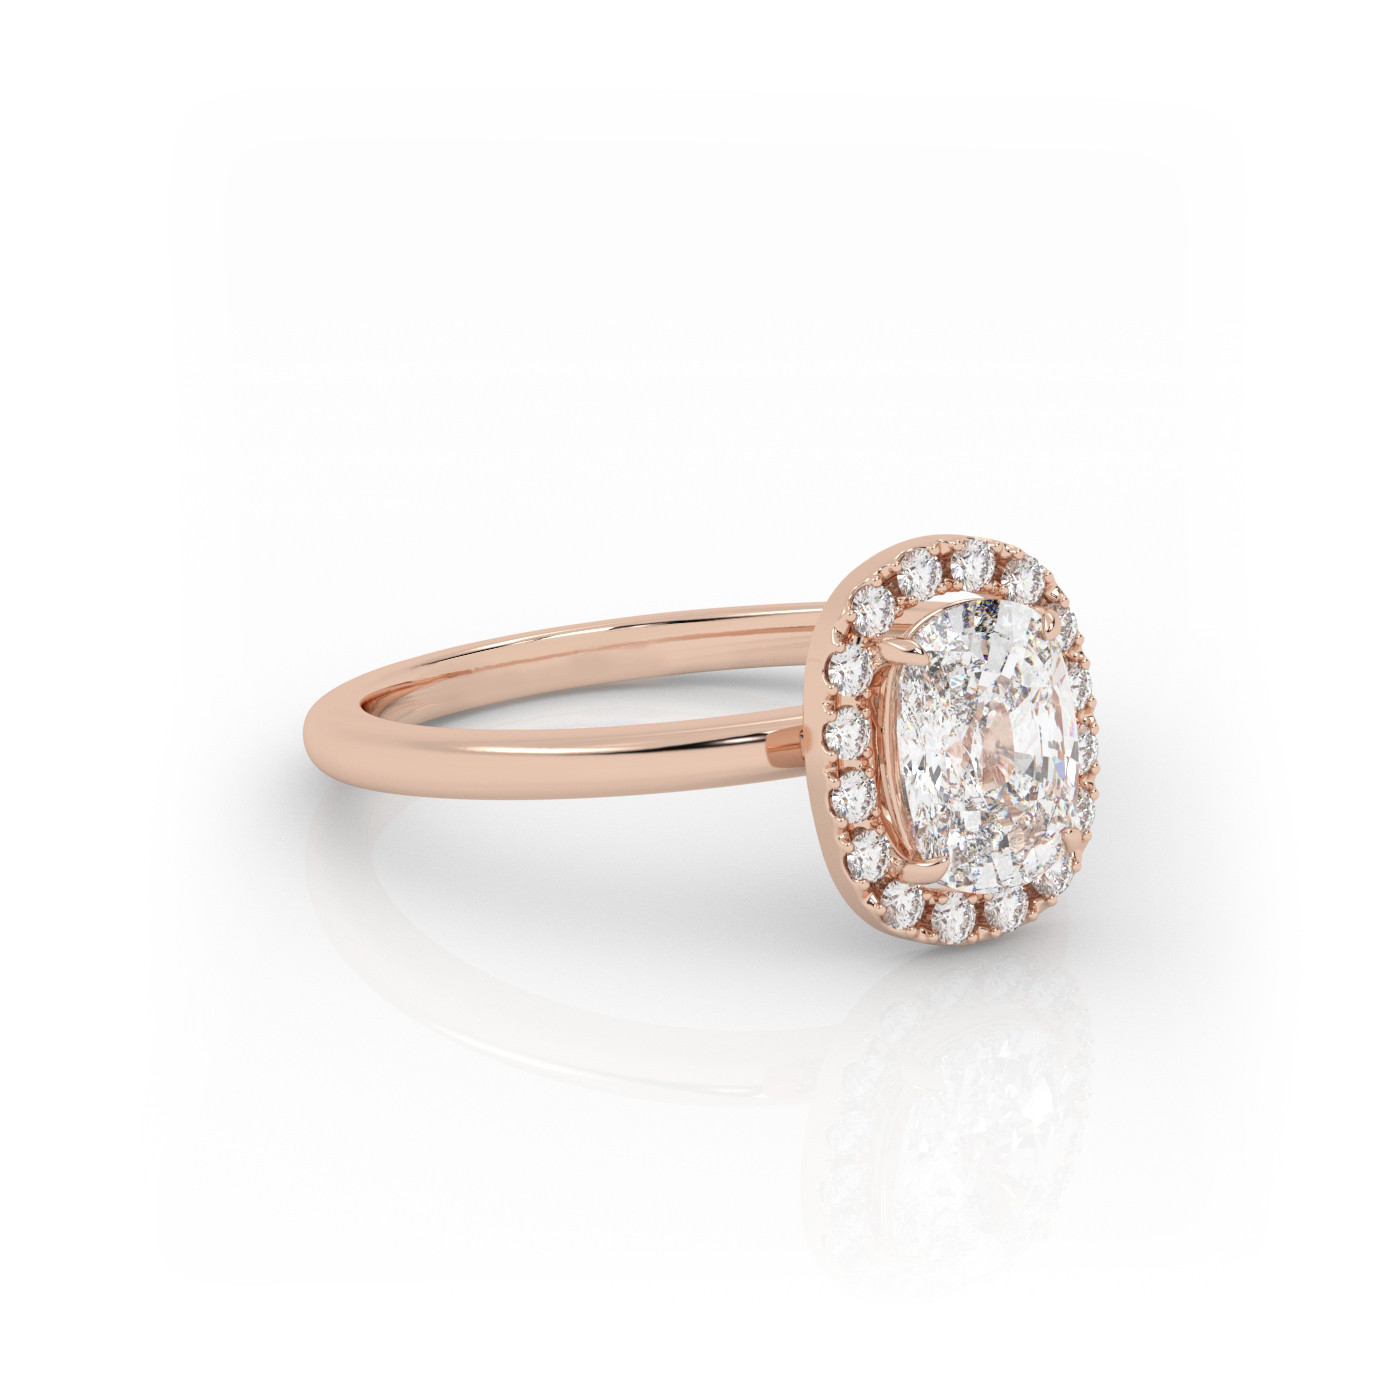 18K ROSE GOLD Elongated Cushion Cut Diamond Ring With Halo Style